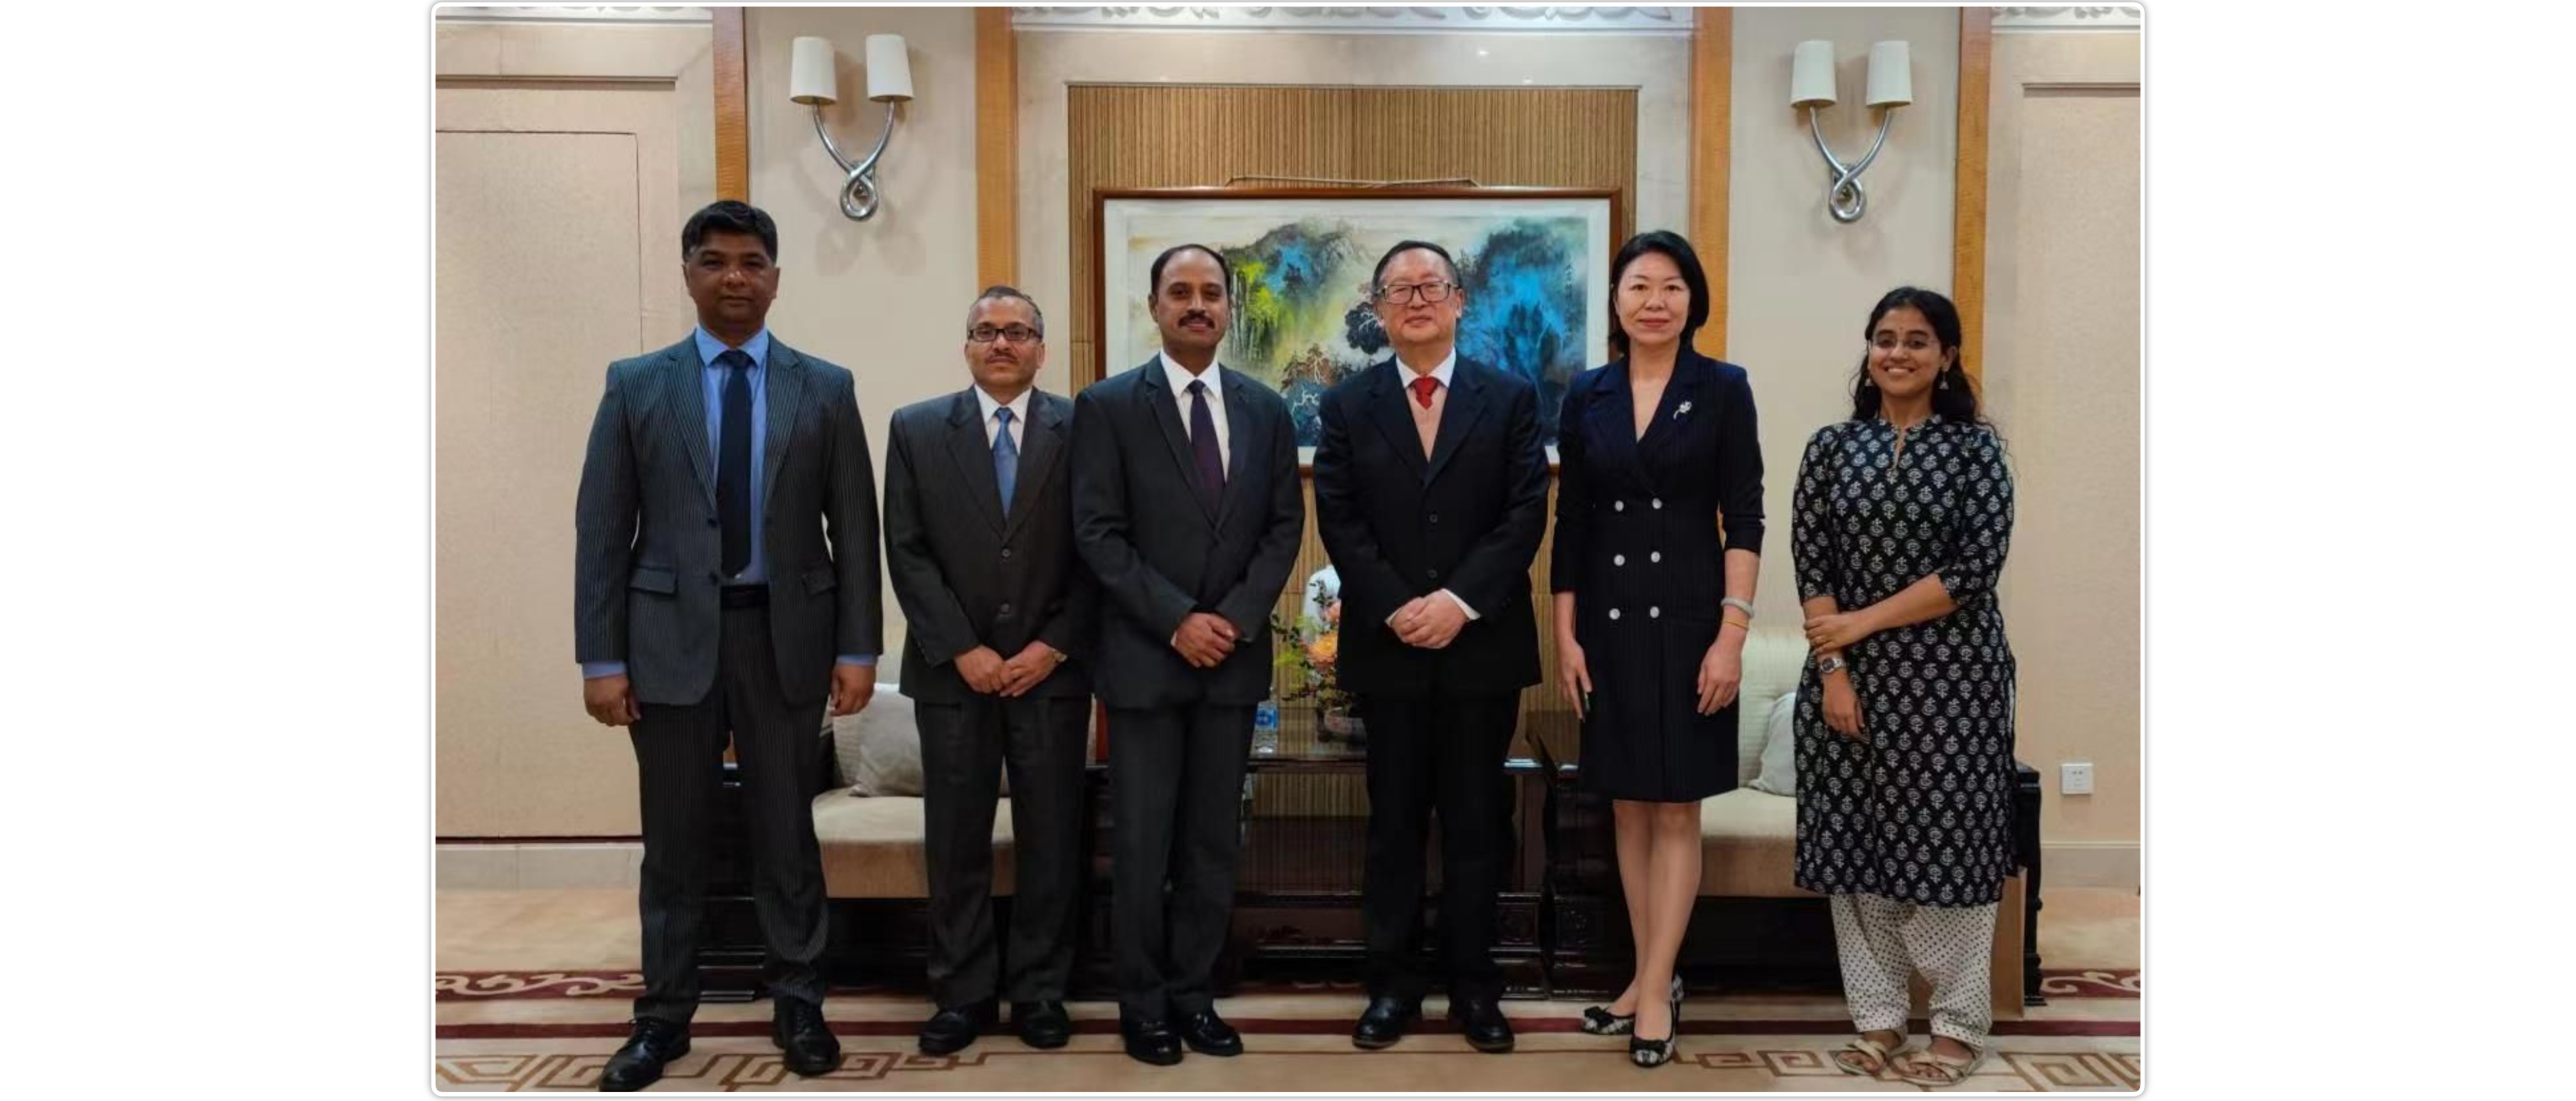 Consul General met with Prof. Yang Jiemian, Shanghai Institute for International Studies (SIIS) on October 24, 2022